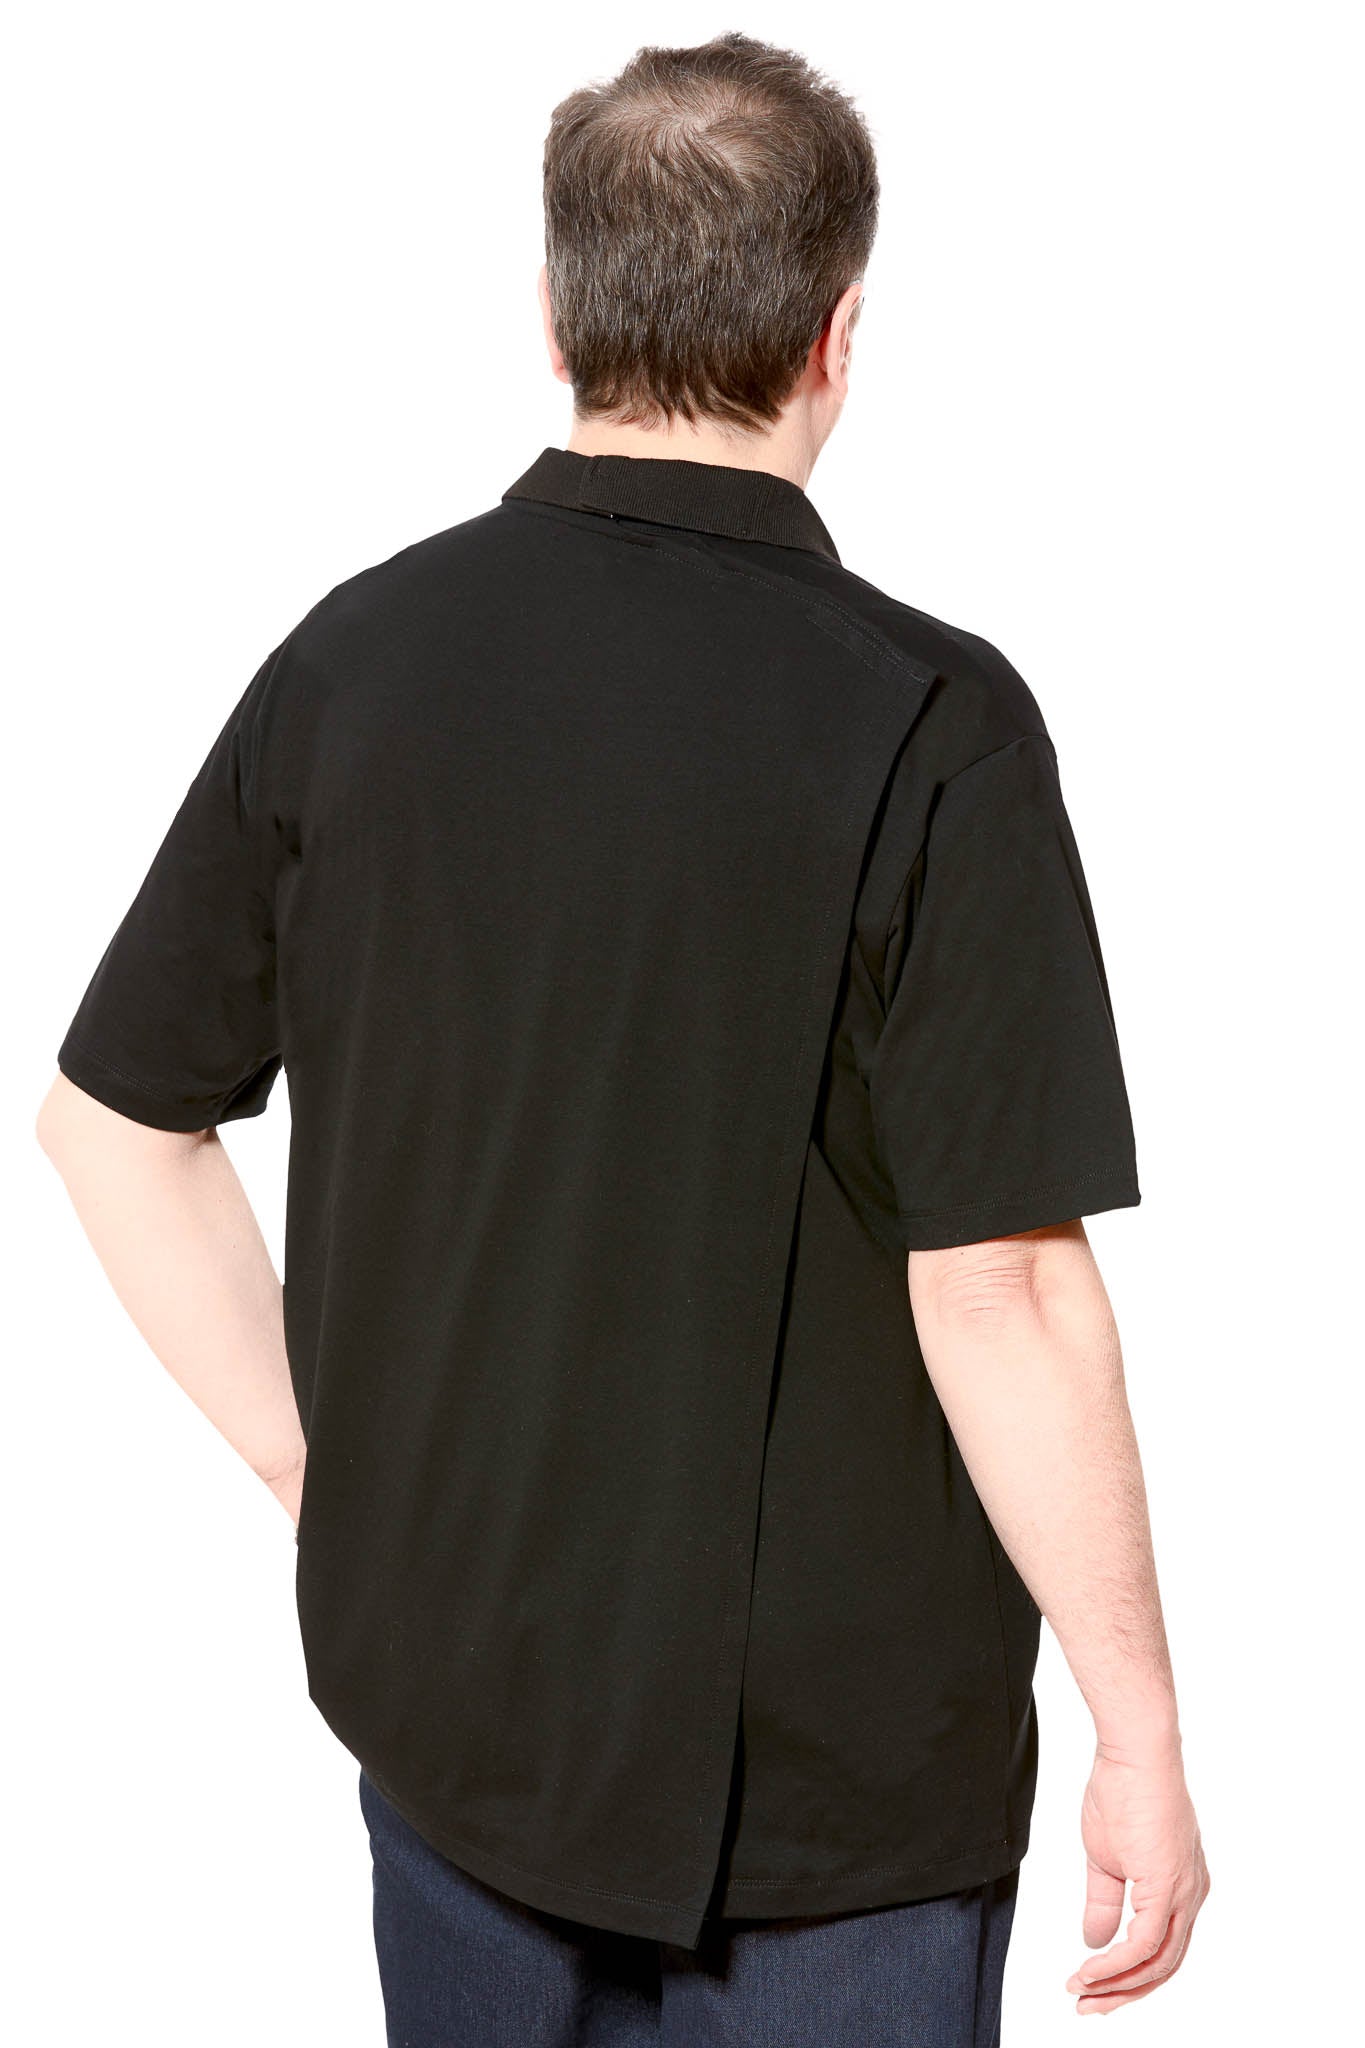 Polo Shirt for Men - Black | Ralfie | Adaptive Clothing by Ovidis